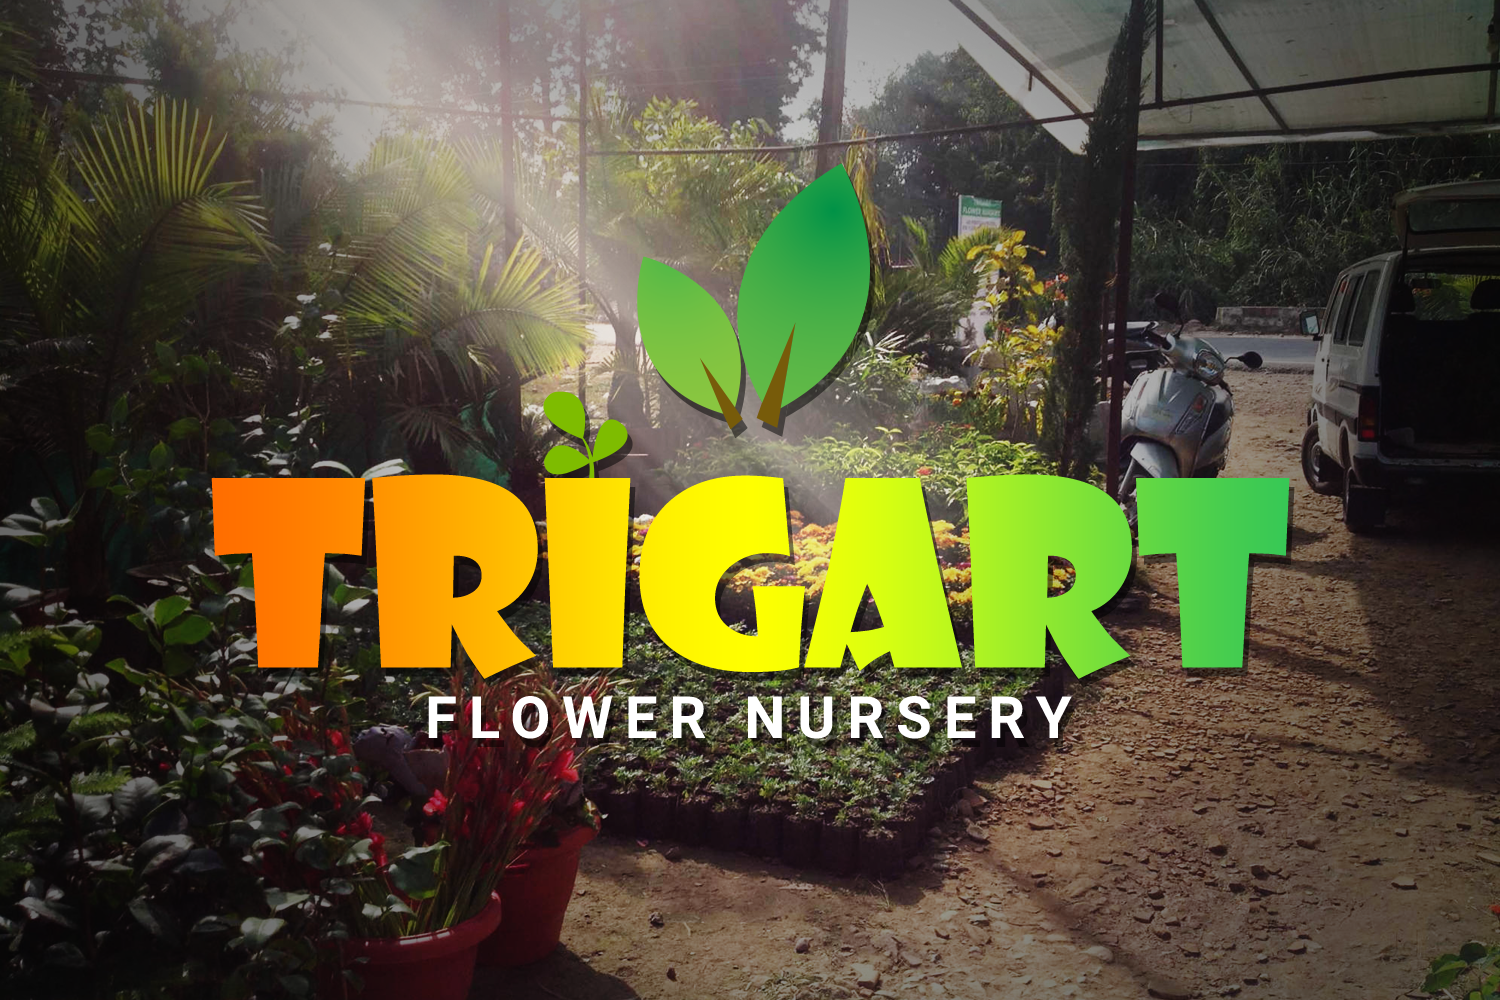 Trigart Flower Nursery